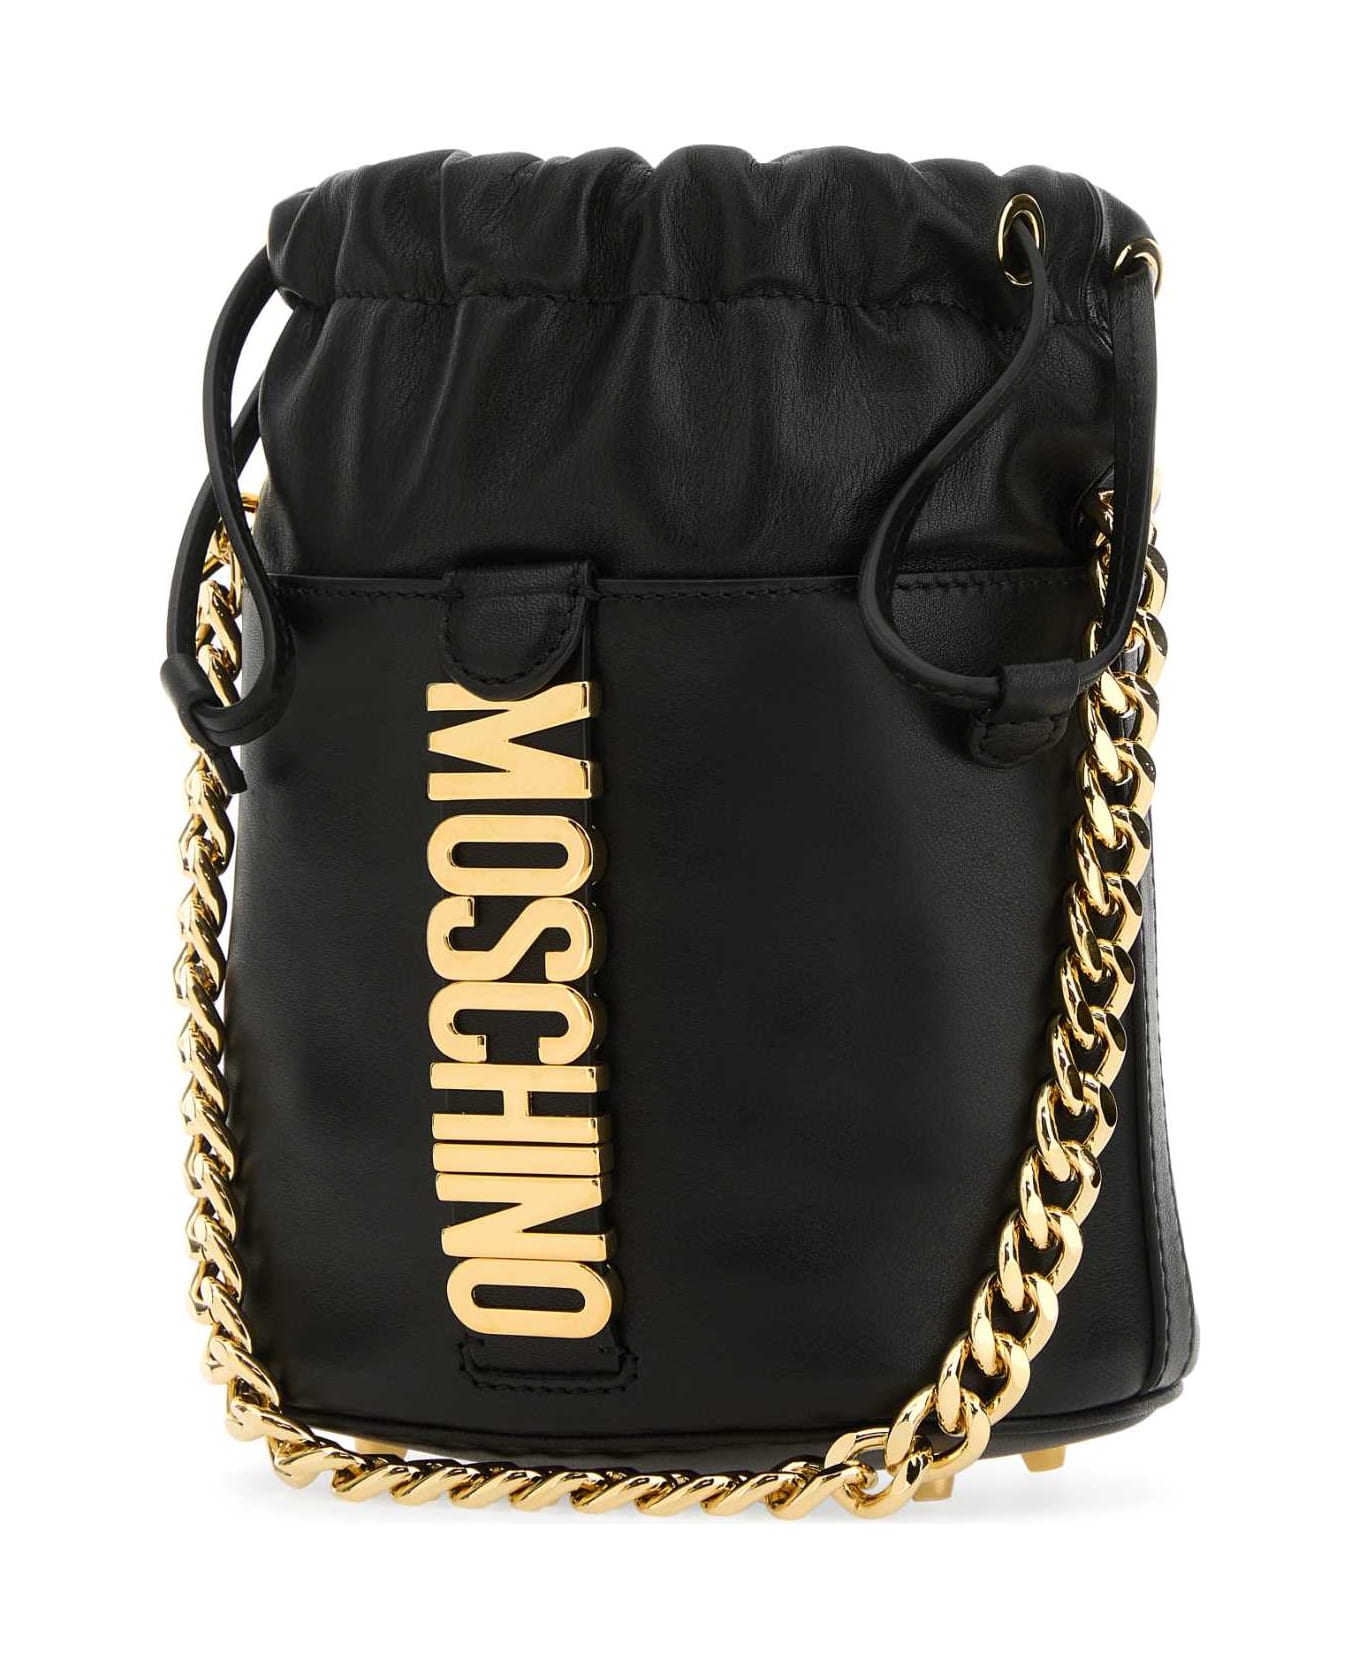 Moschino Black Leather Bucket Bag - NERO トートバッグ